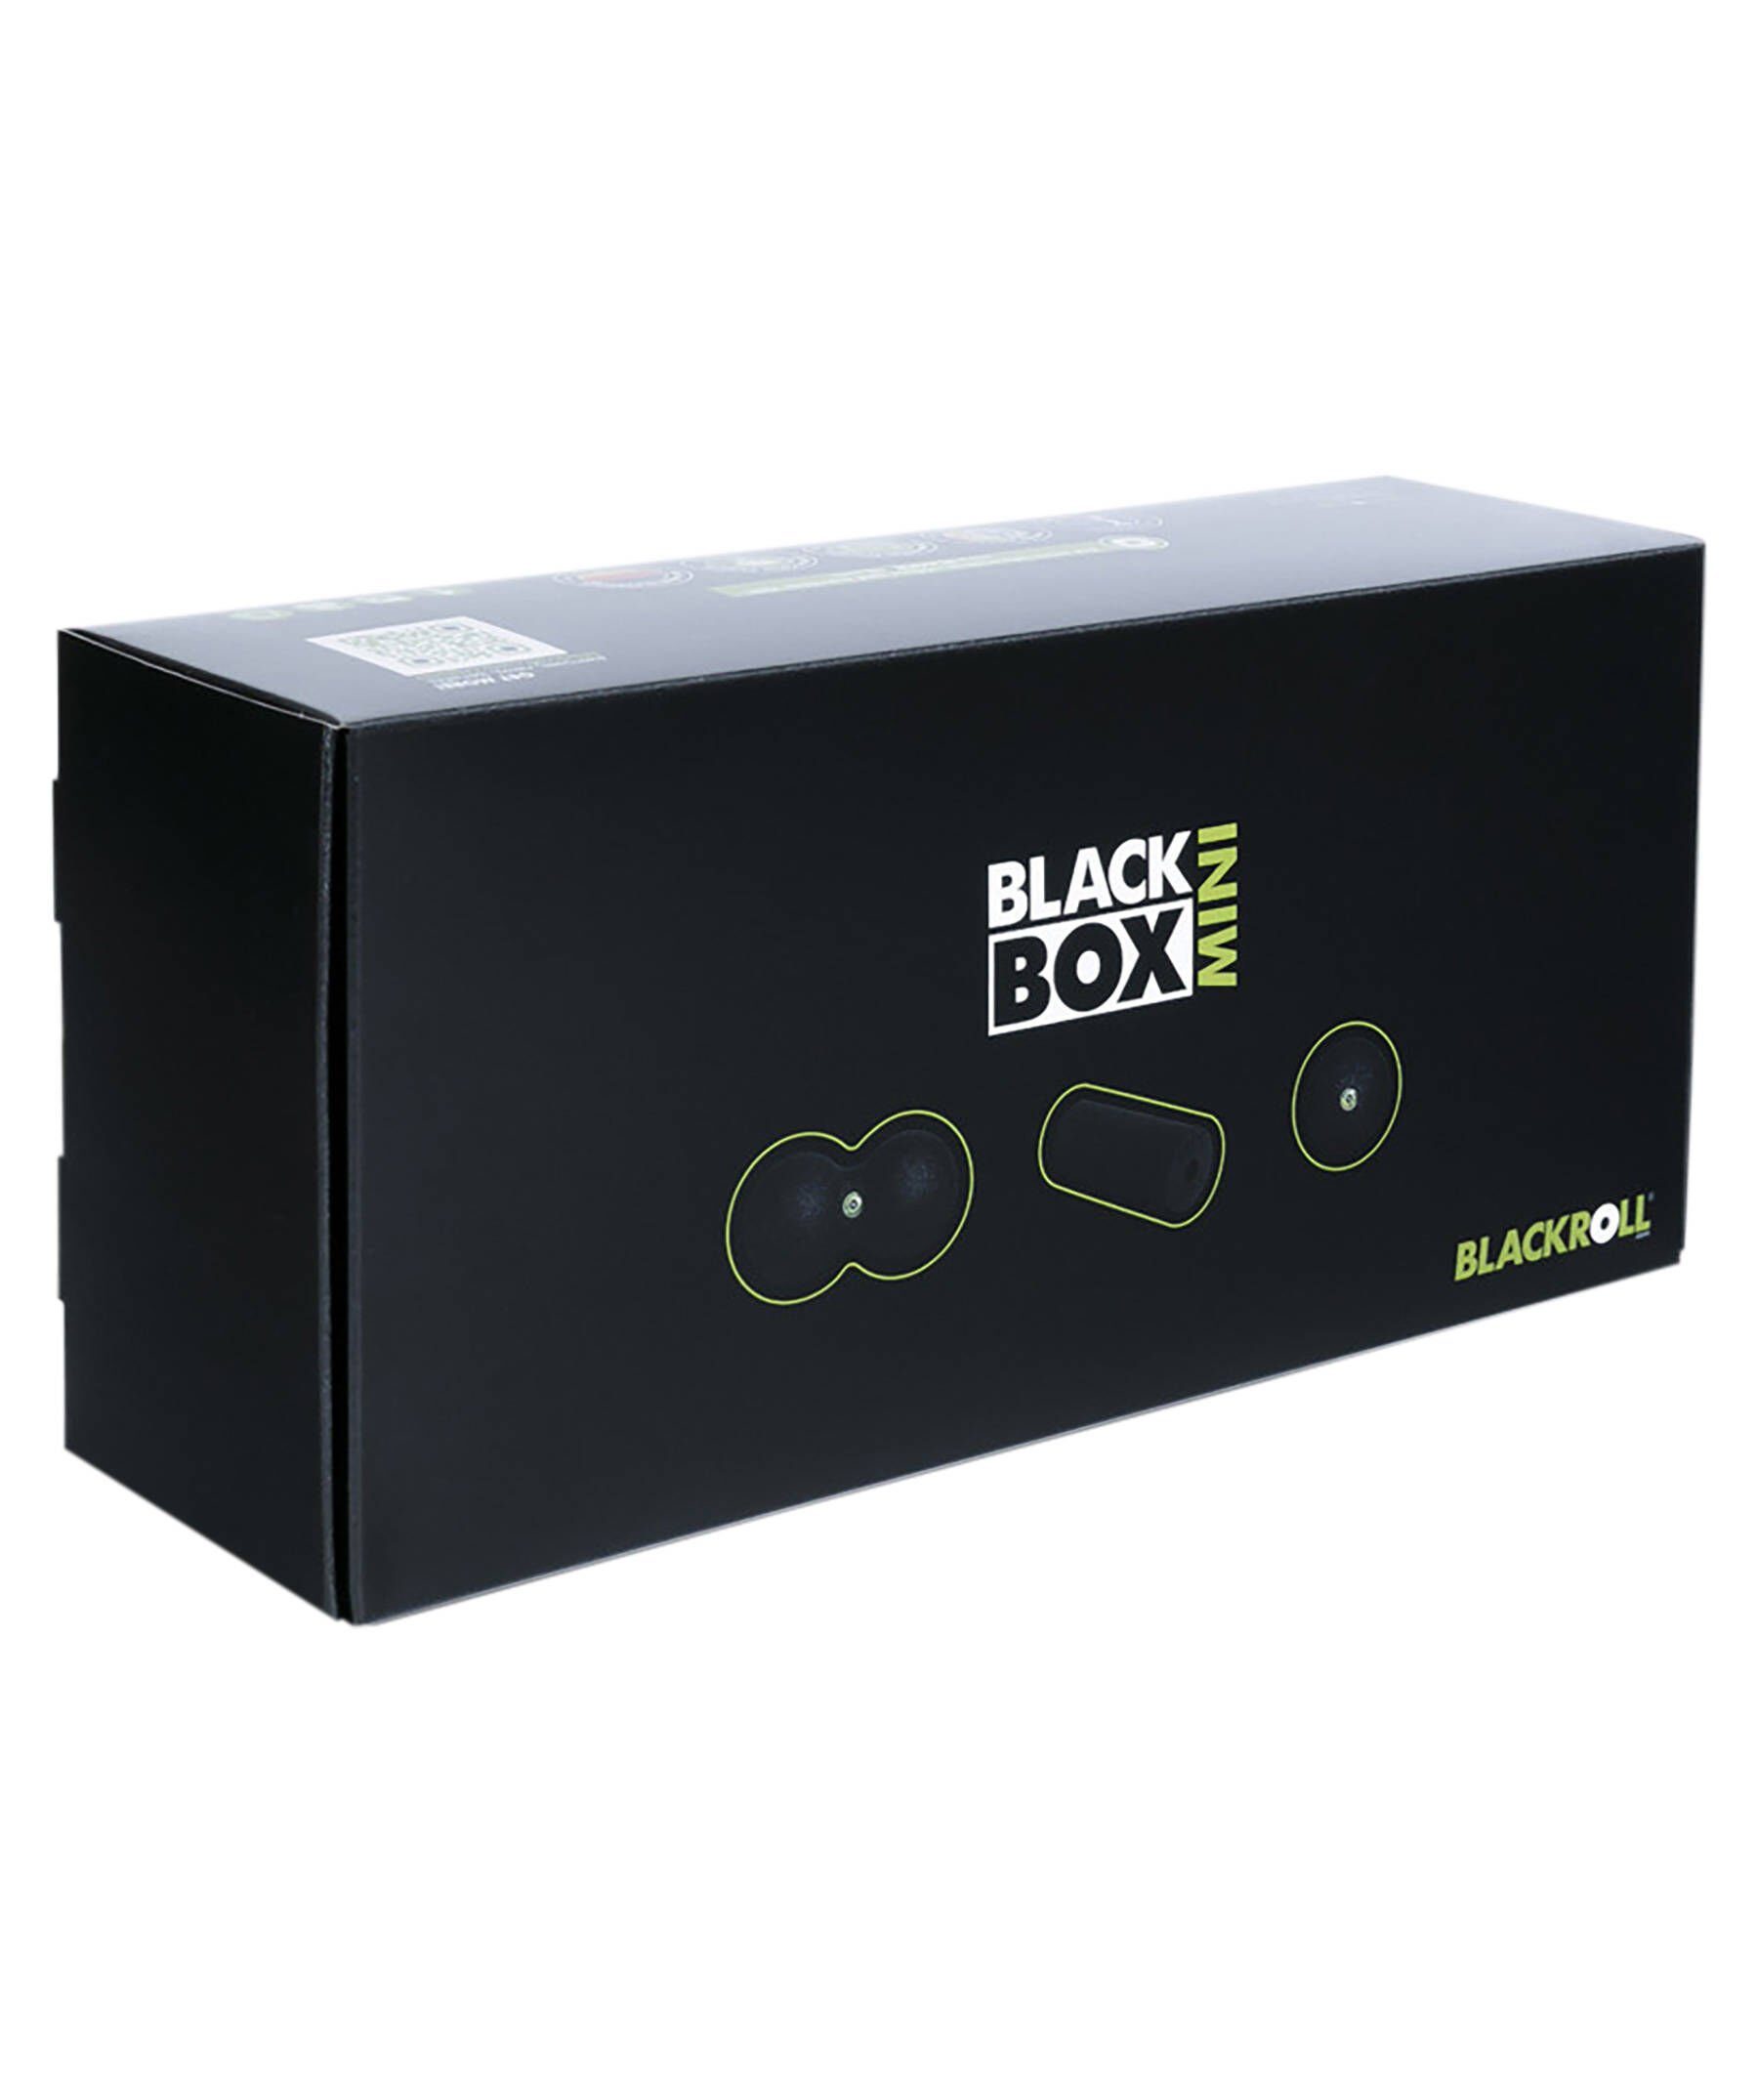 Blackroll "Blackbox Massagerolle Blackroll Mini"